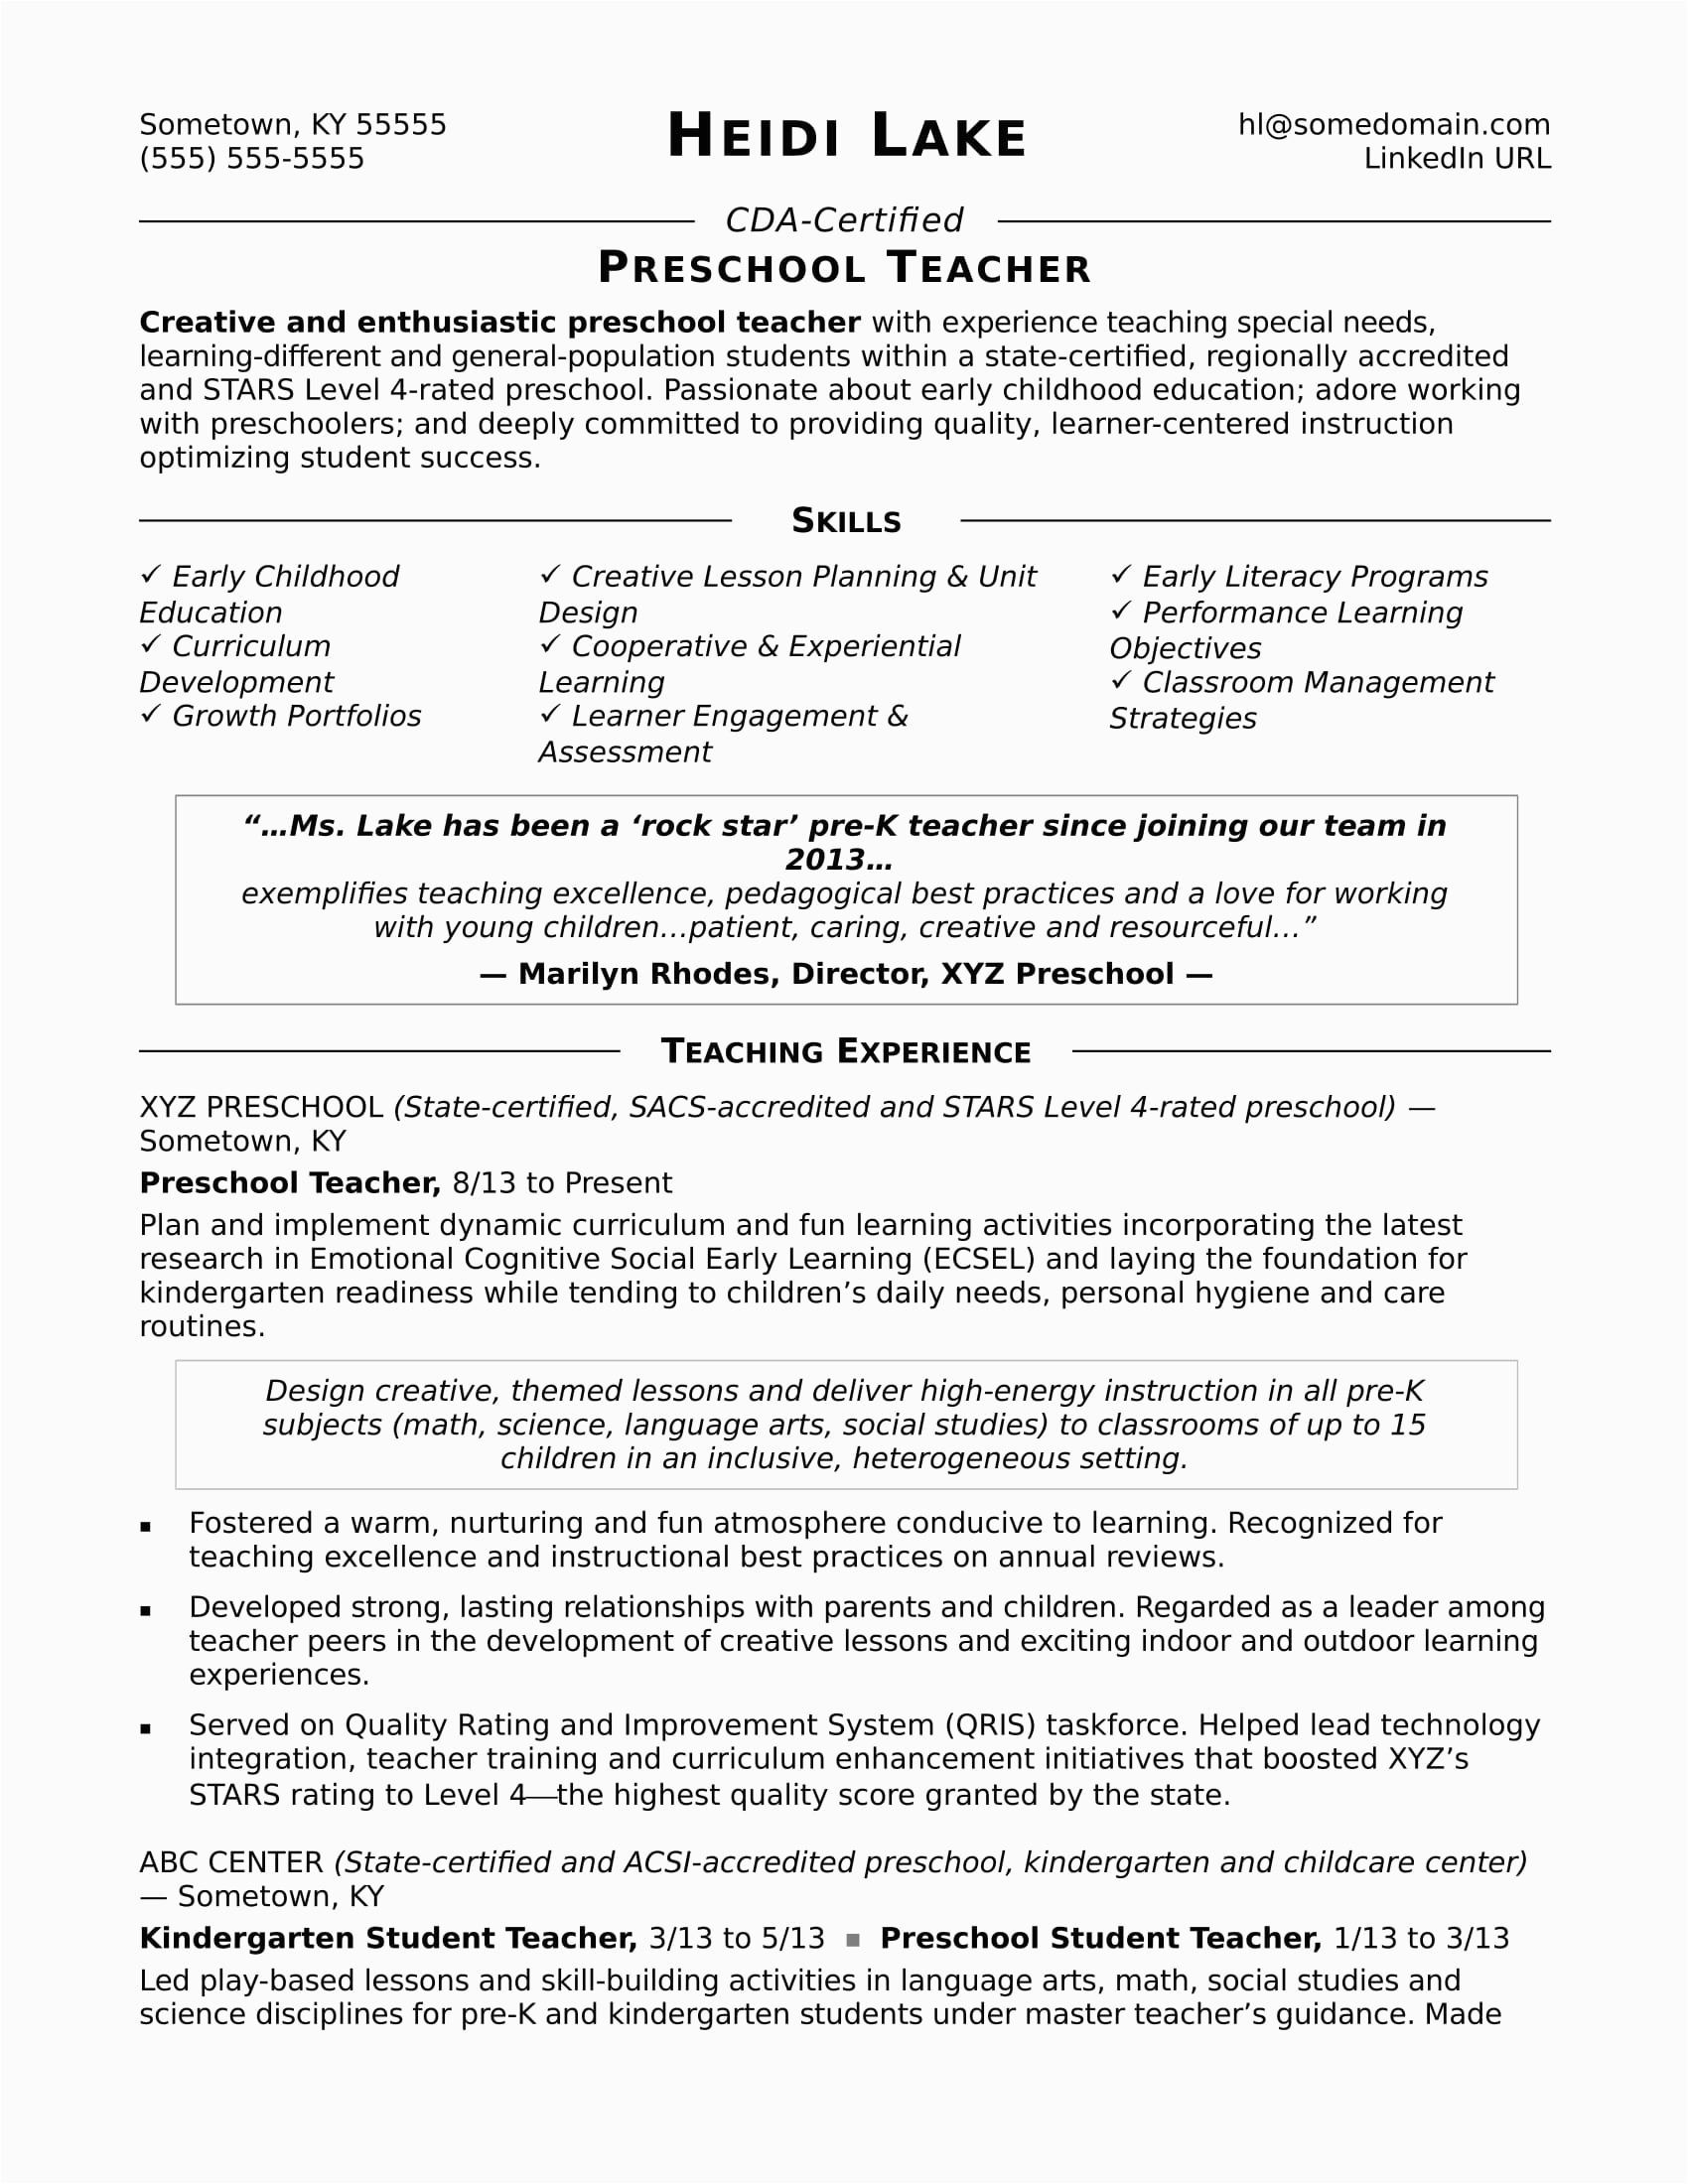 Sample Resume for A Perschool Teacher Position Preschool Teacher Resume Sample